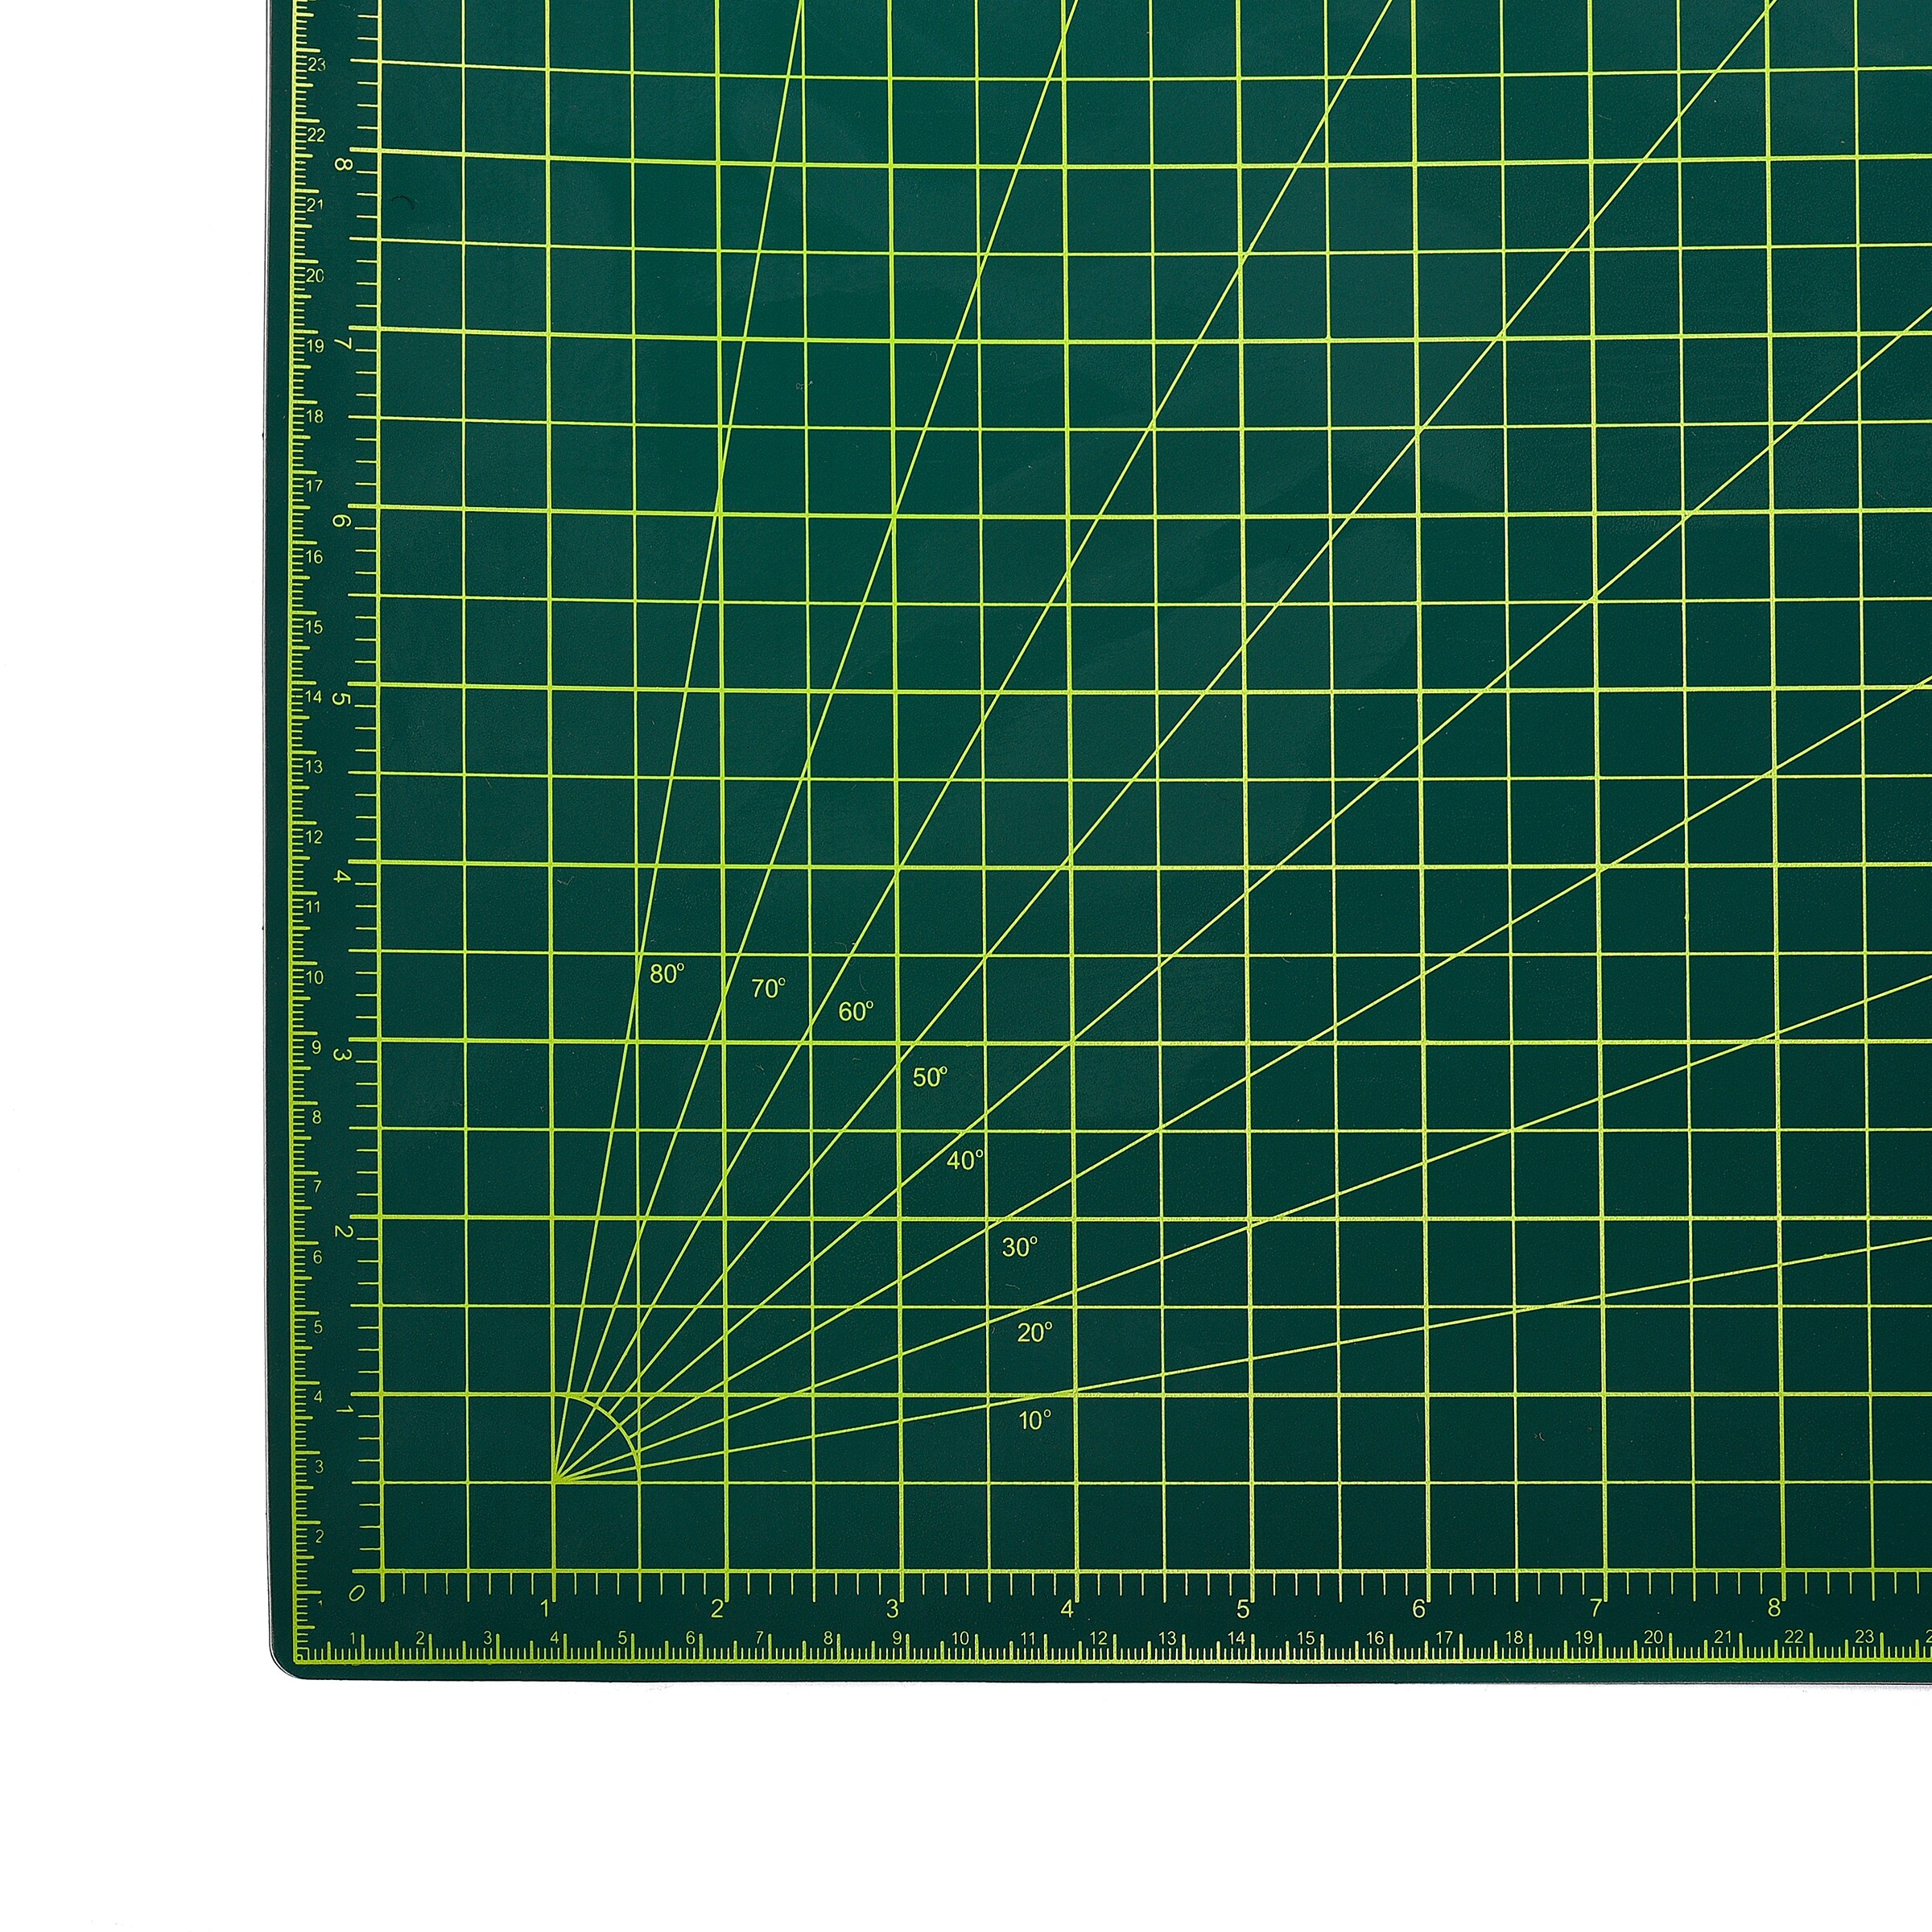 30 x 42 Cutting Mat: 3-ply, reversible-green (gridded)/black (plain)